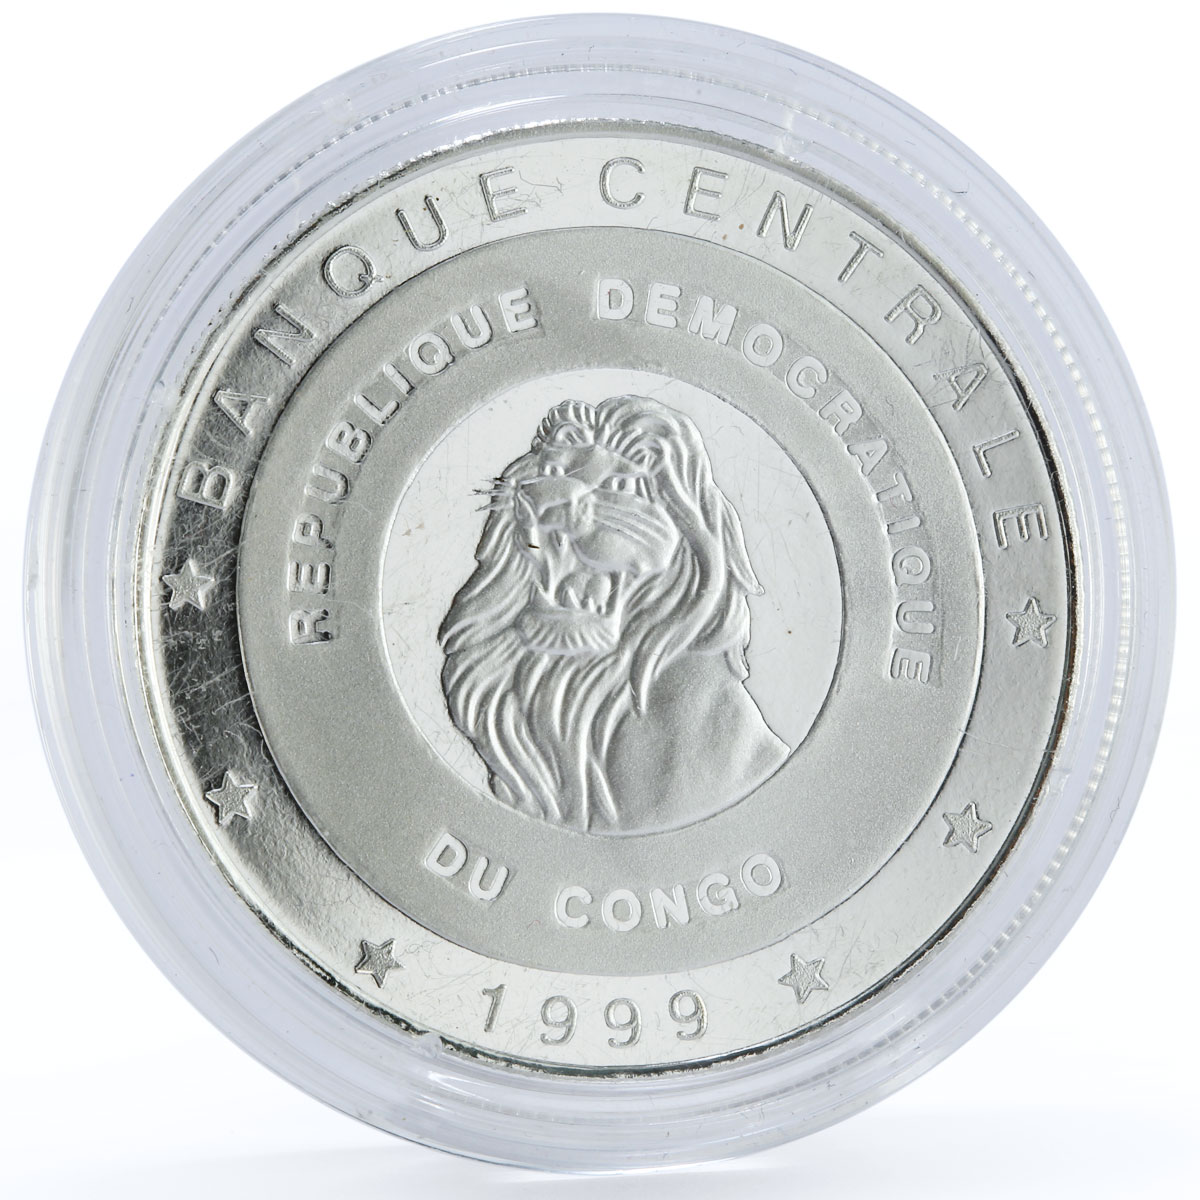 Congo 10 francs Explorer of Africa David Livingstone silver coin 1999